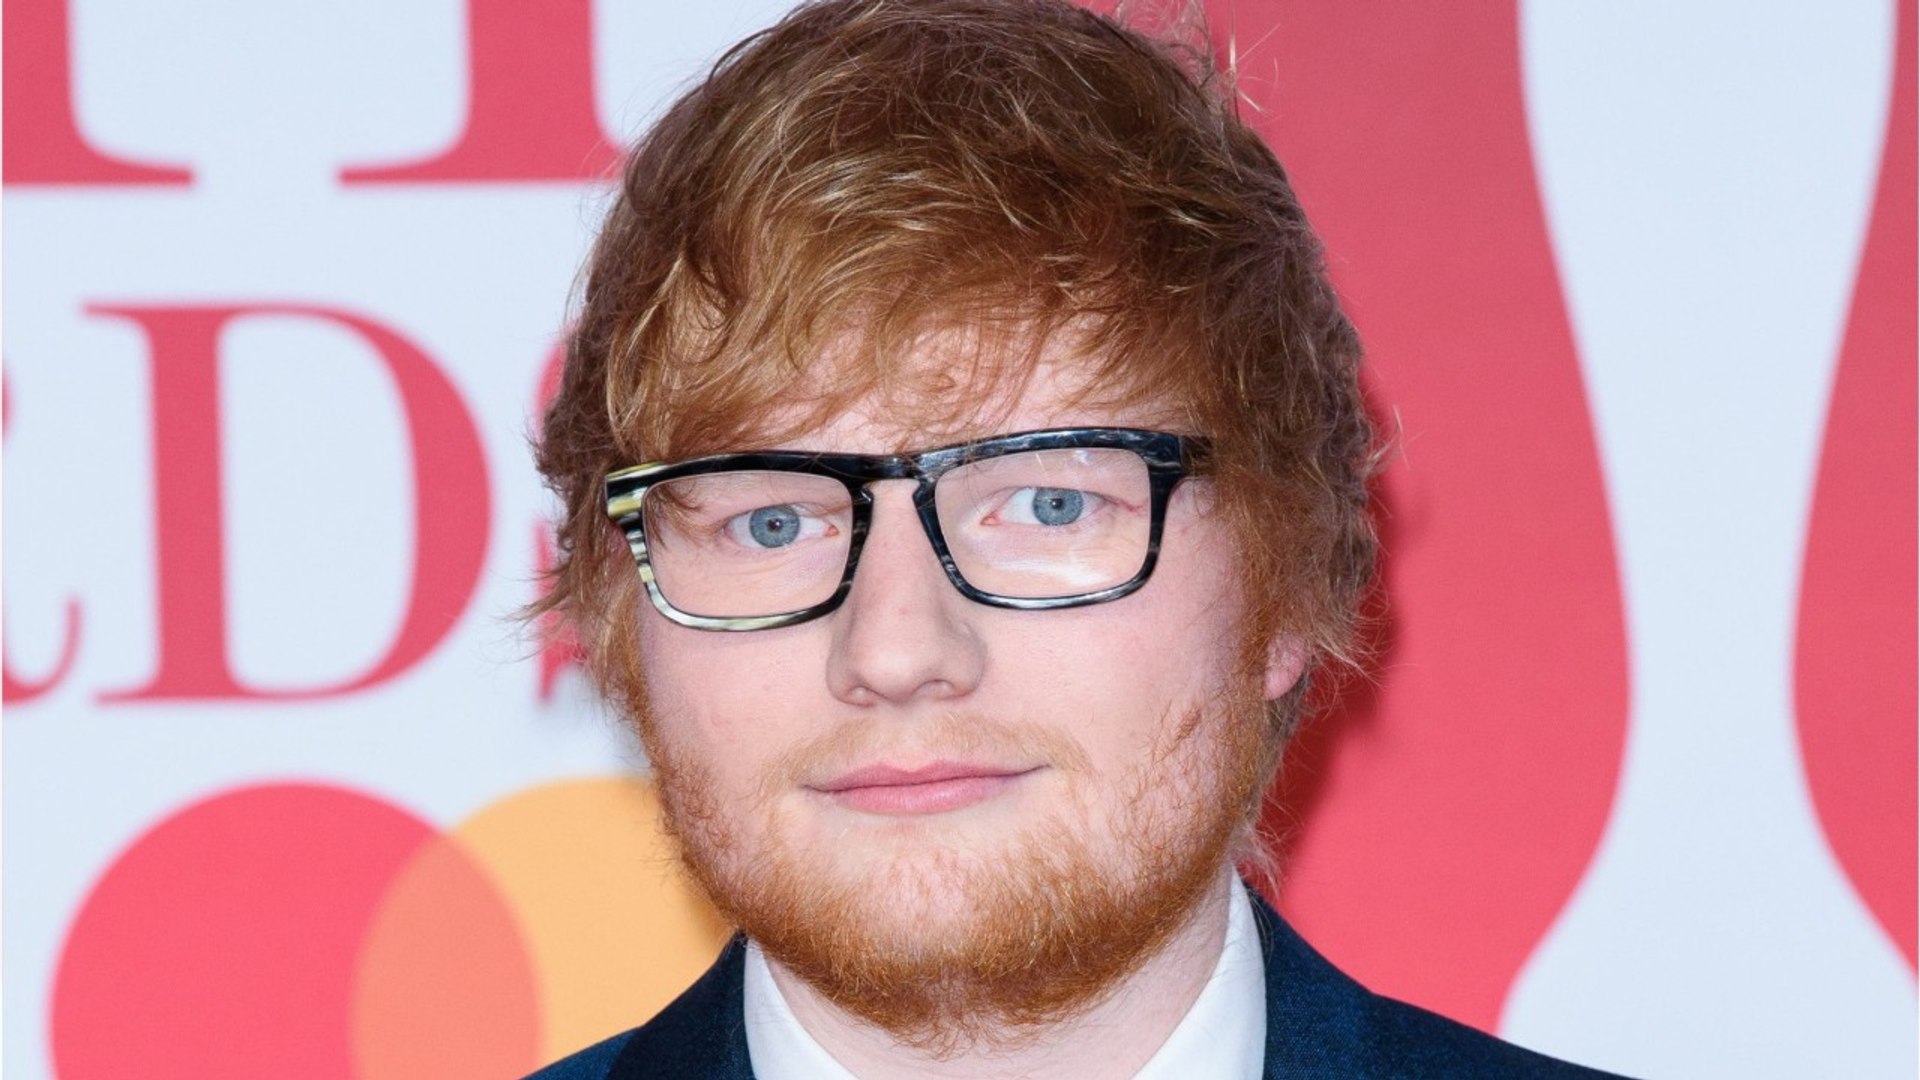 'Bowie Bonds' creator sues Ed Sheeran for copying Marvin Gaye hit